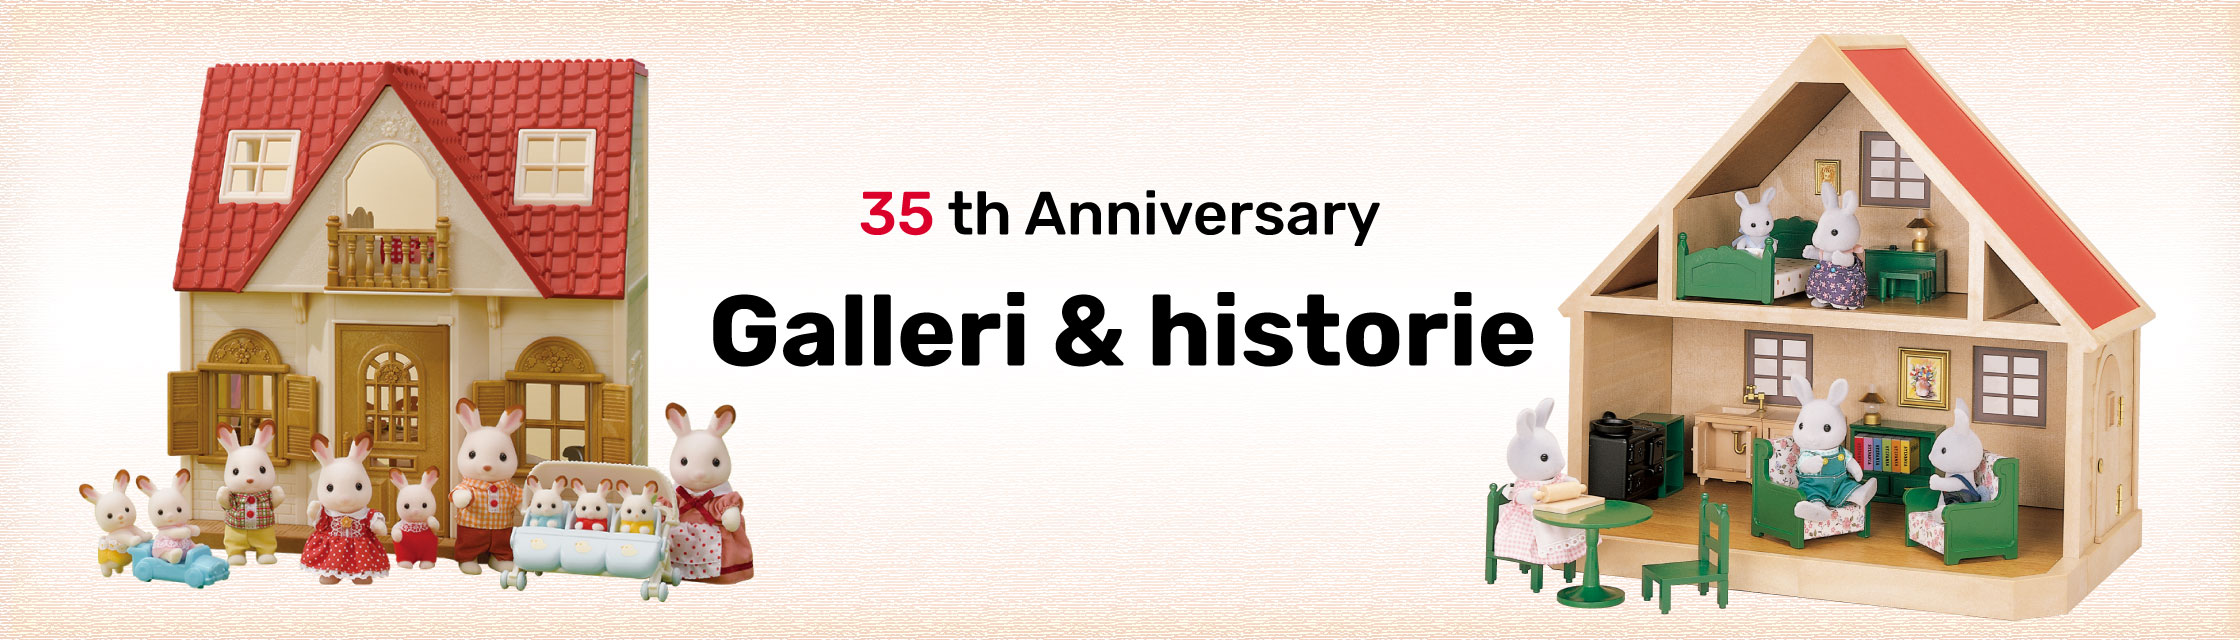 Galleri & historie